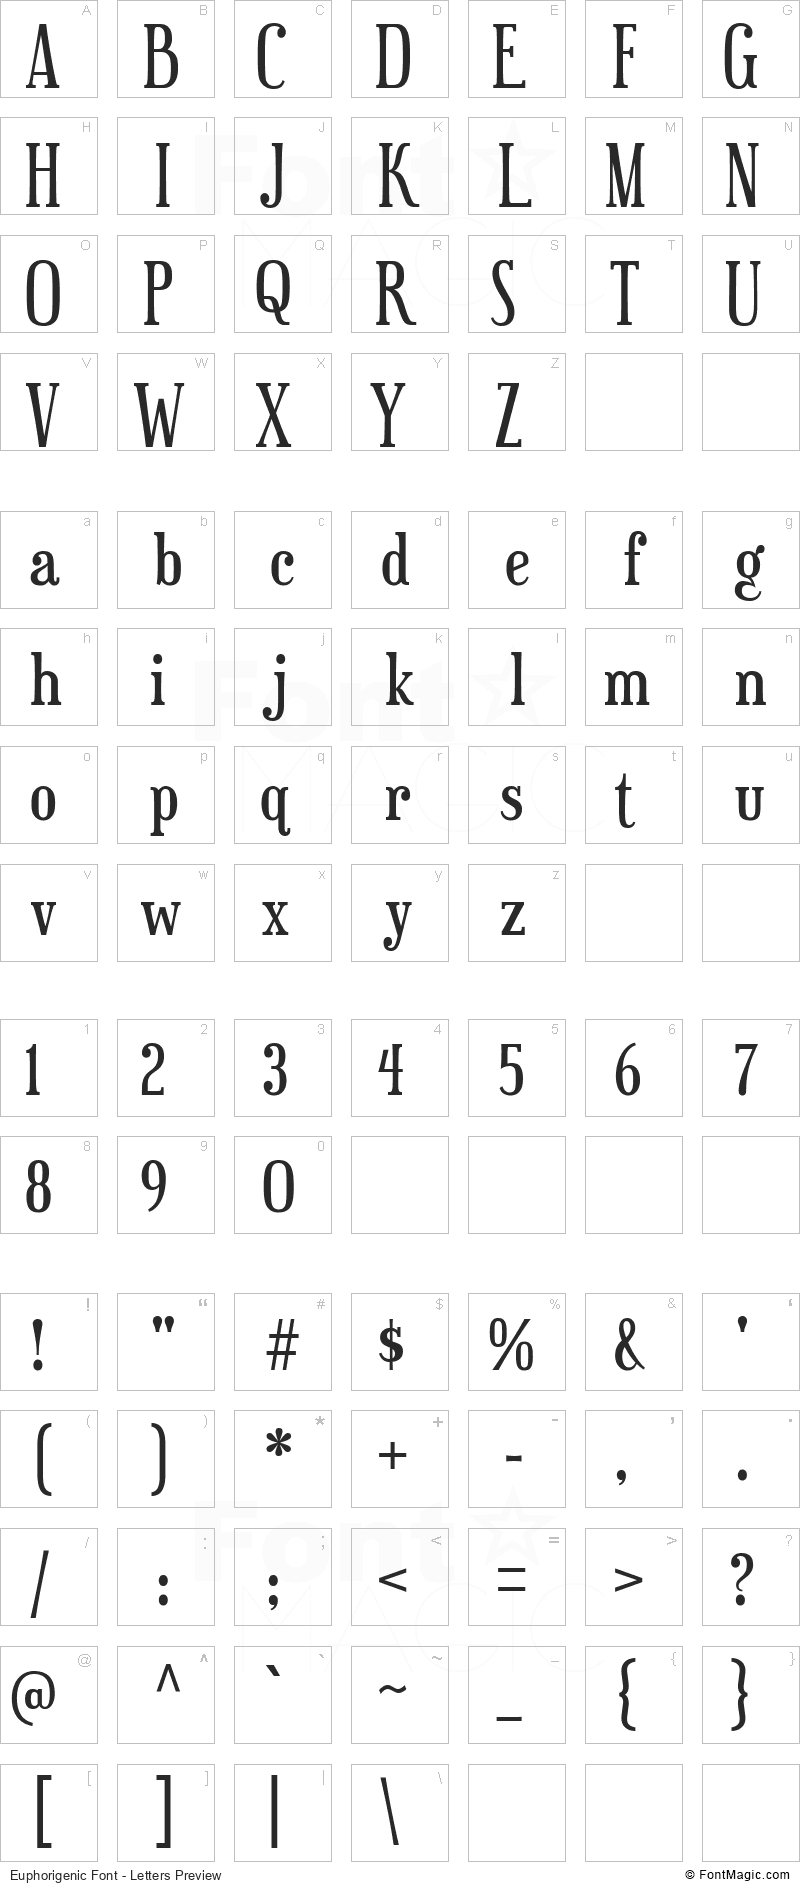 Euphorigenic Font - All Latters Preview Chart